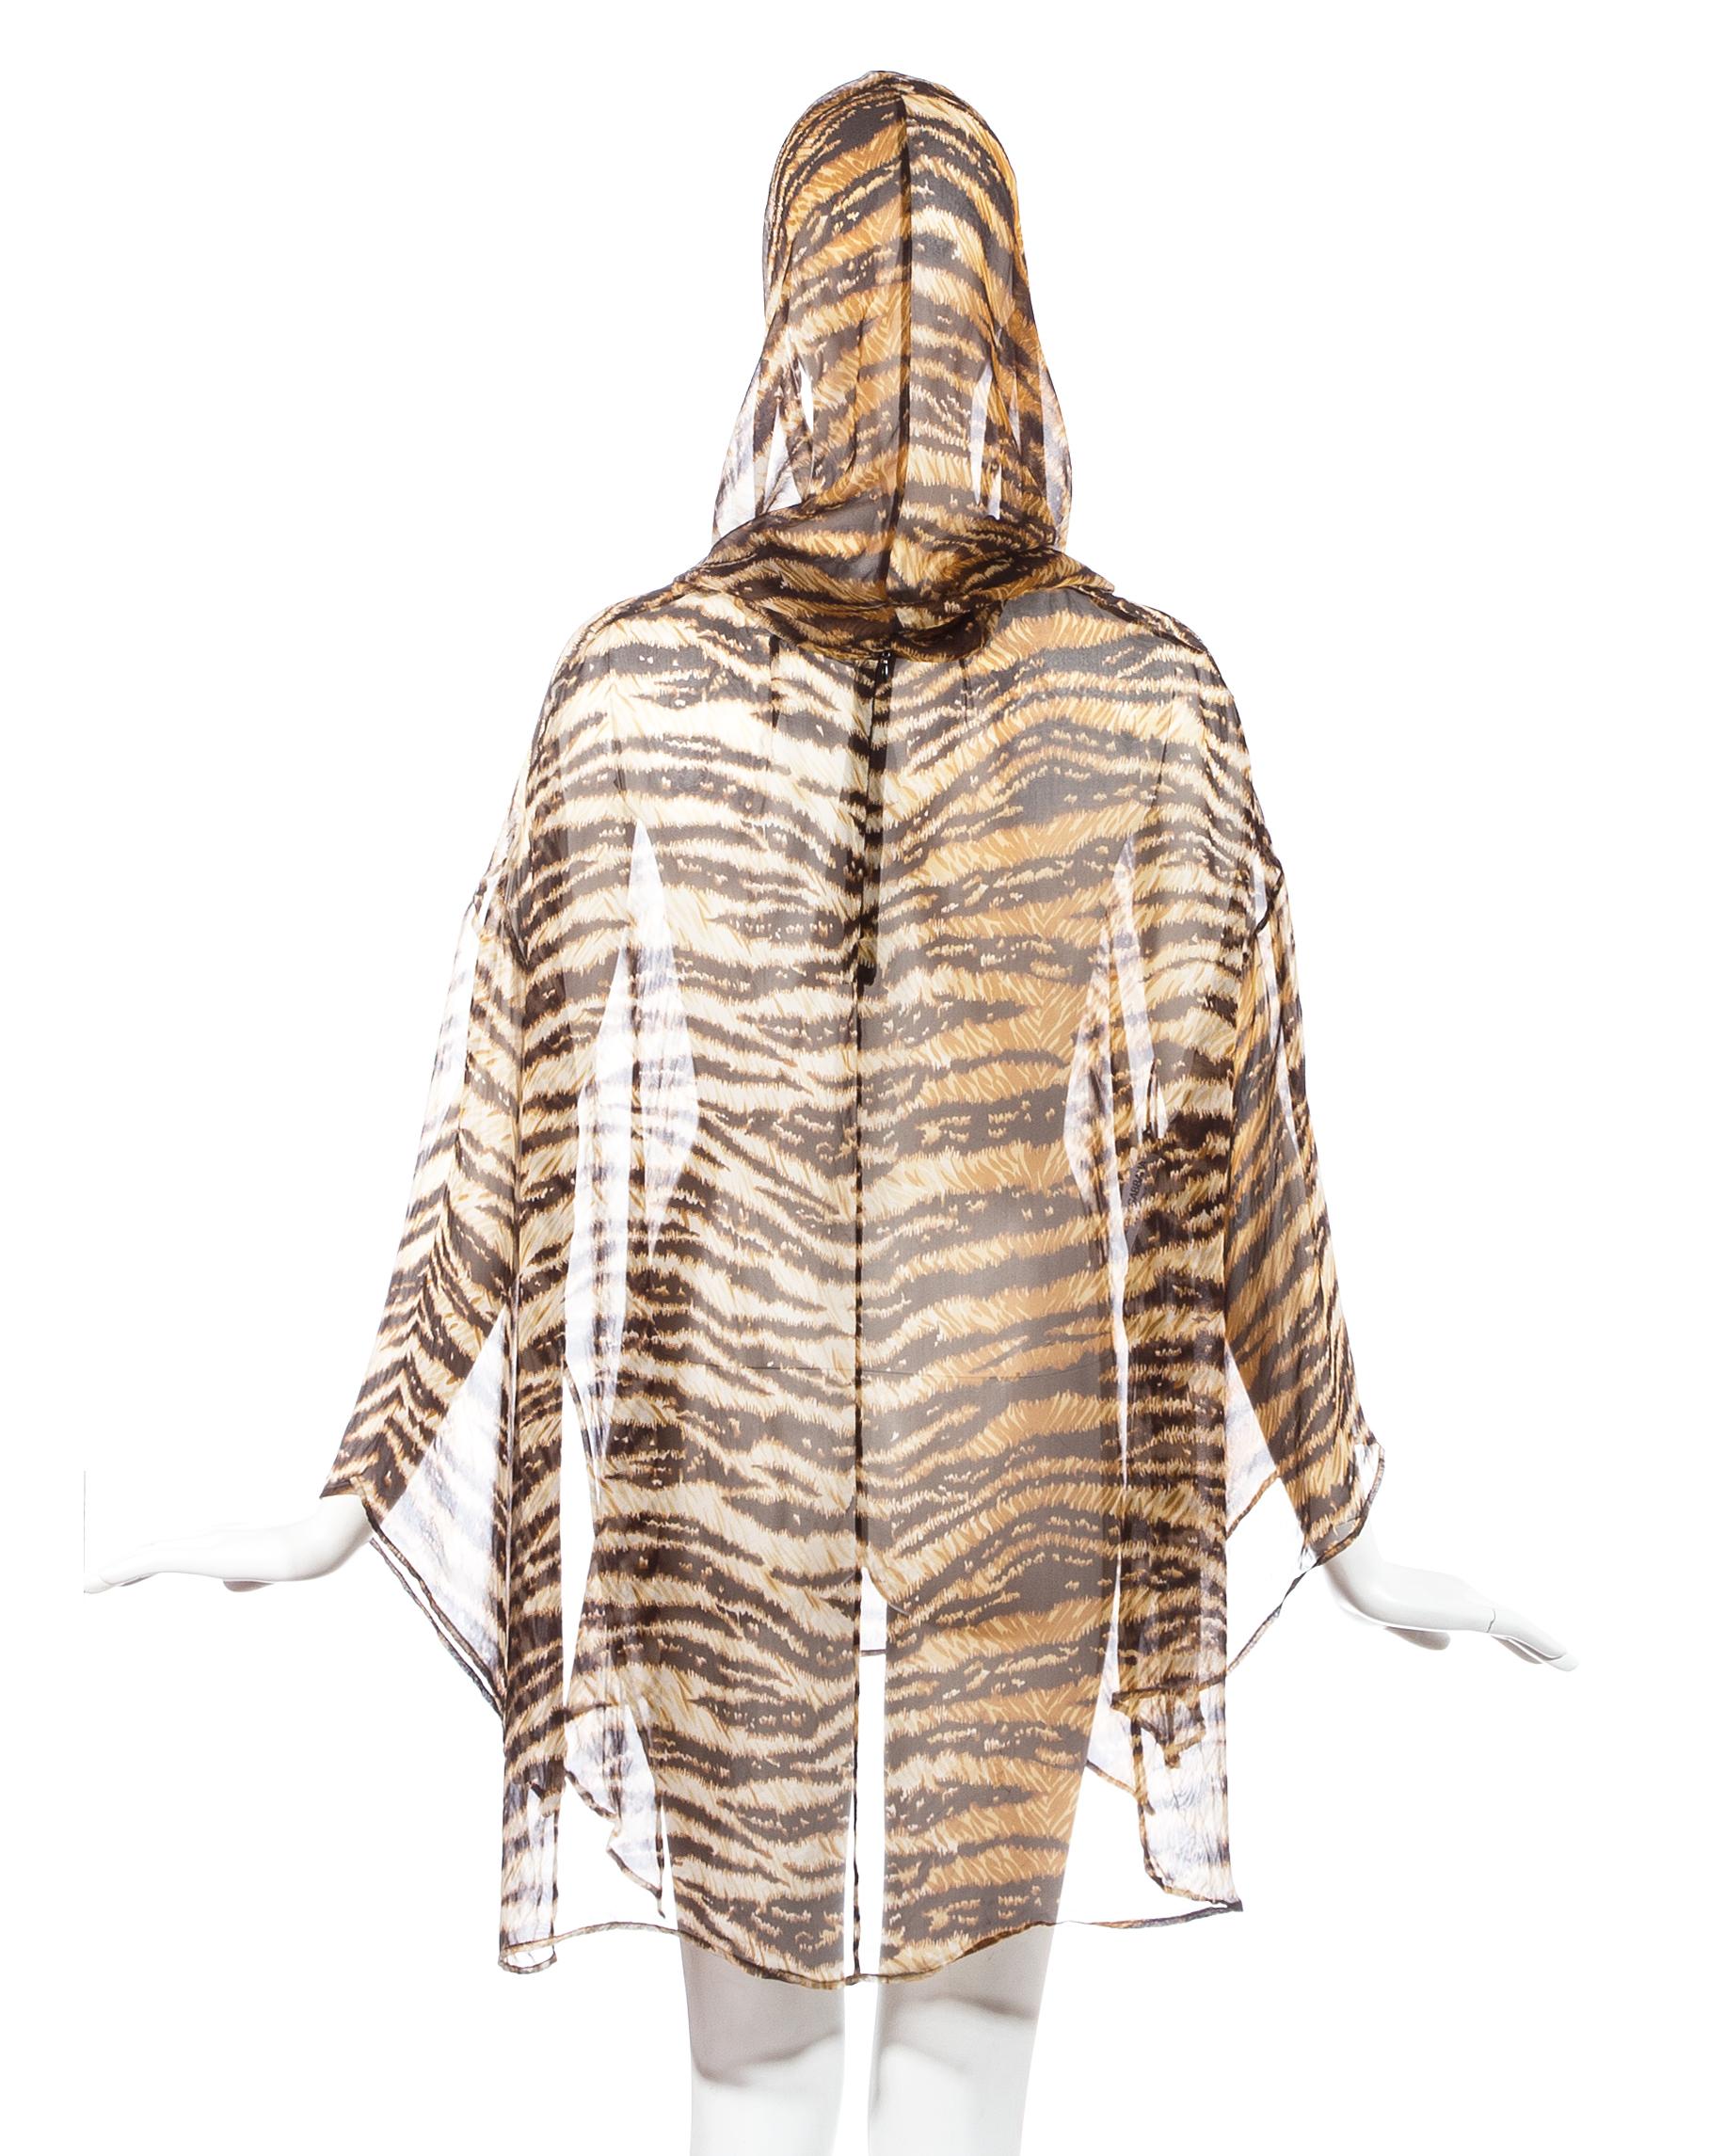 Dolce & Gabbana animal print silk chiffon hooded caftan dress, ss 1996 1